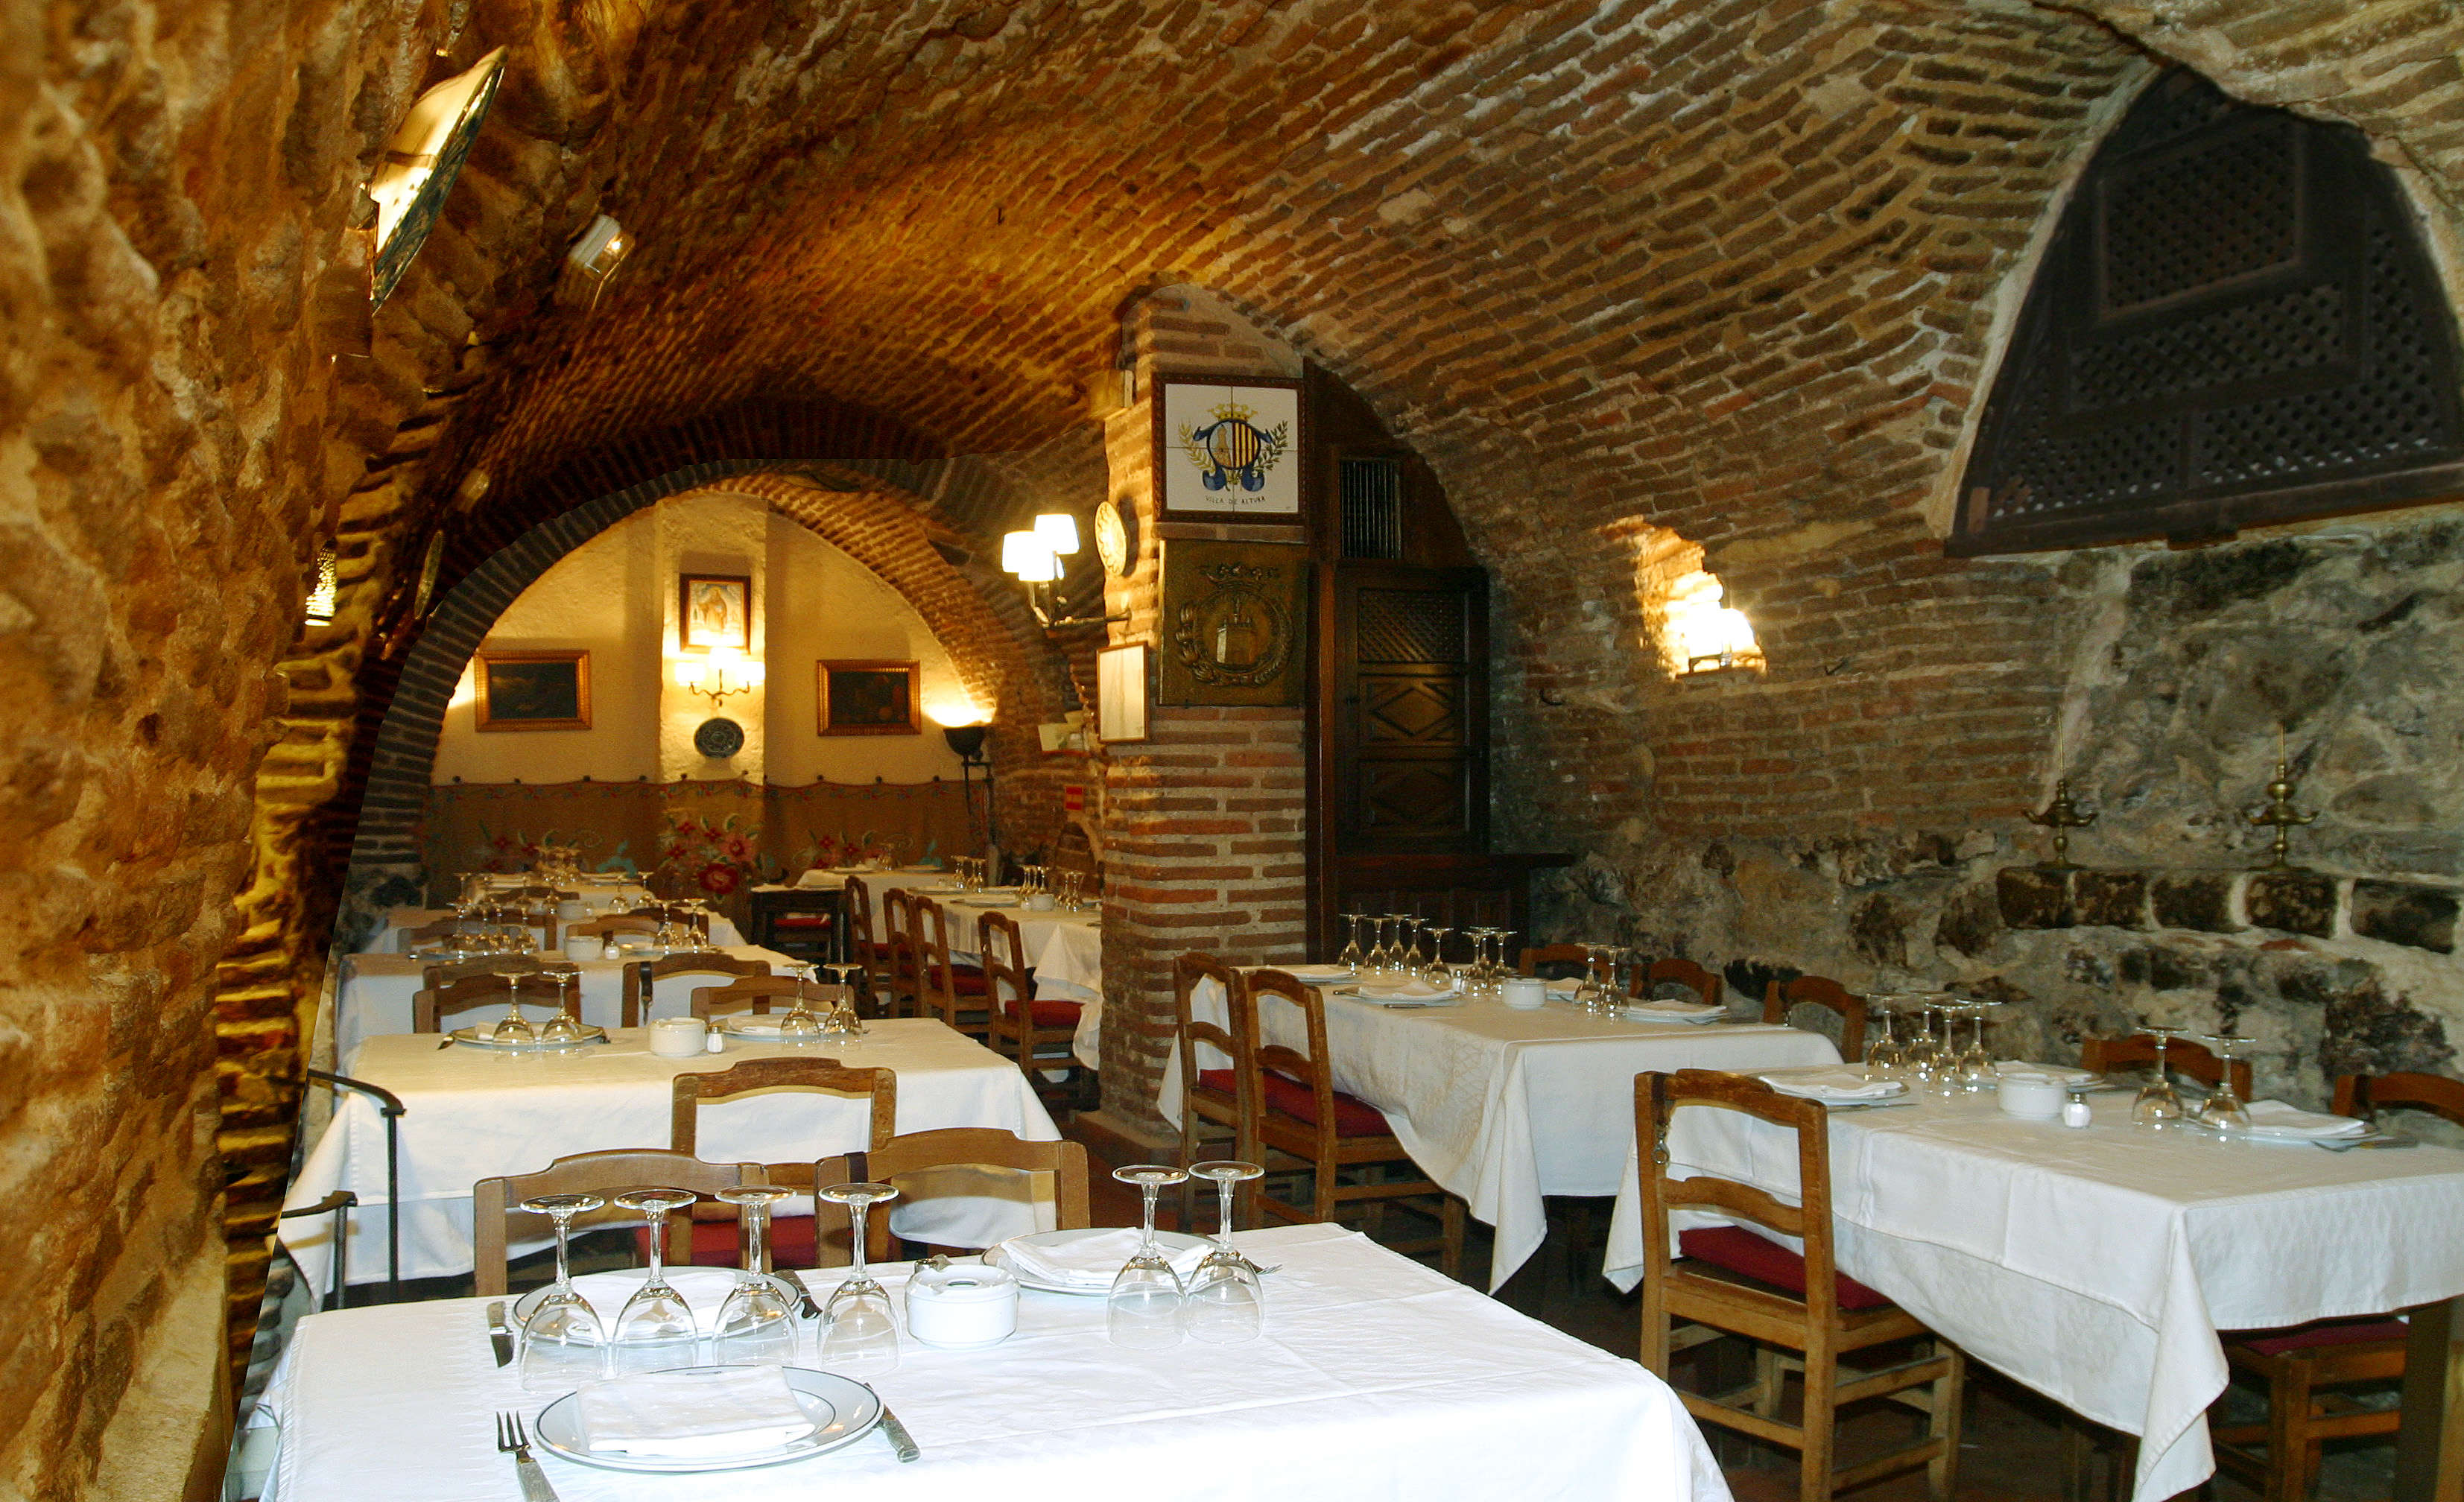 El Sobrino de Botín, Madrid - Get El Sobrino de Botín Restaurant Reviews on Times of India Travel